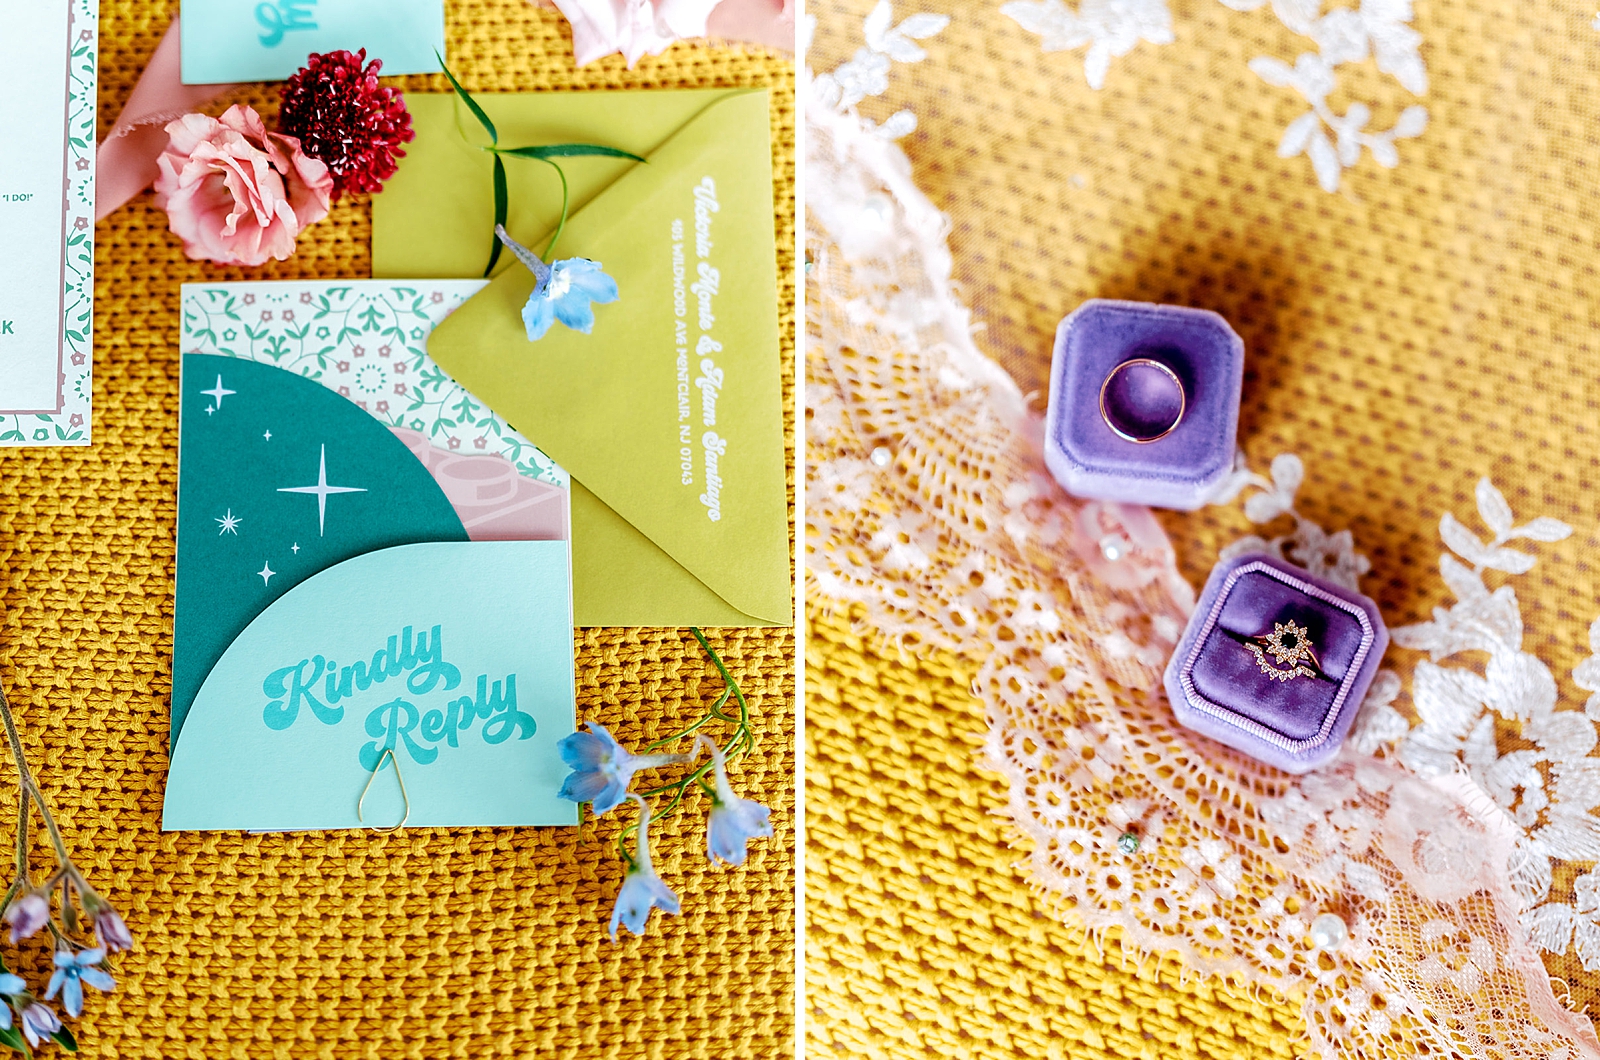 Left photo: Up close shot of the wedding invitations.
Right photo: Up close shot of the rings and ring box.